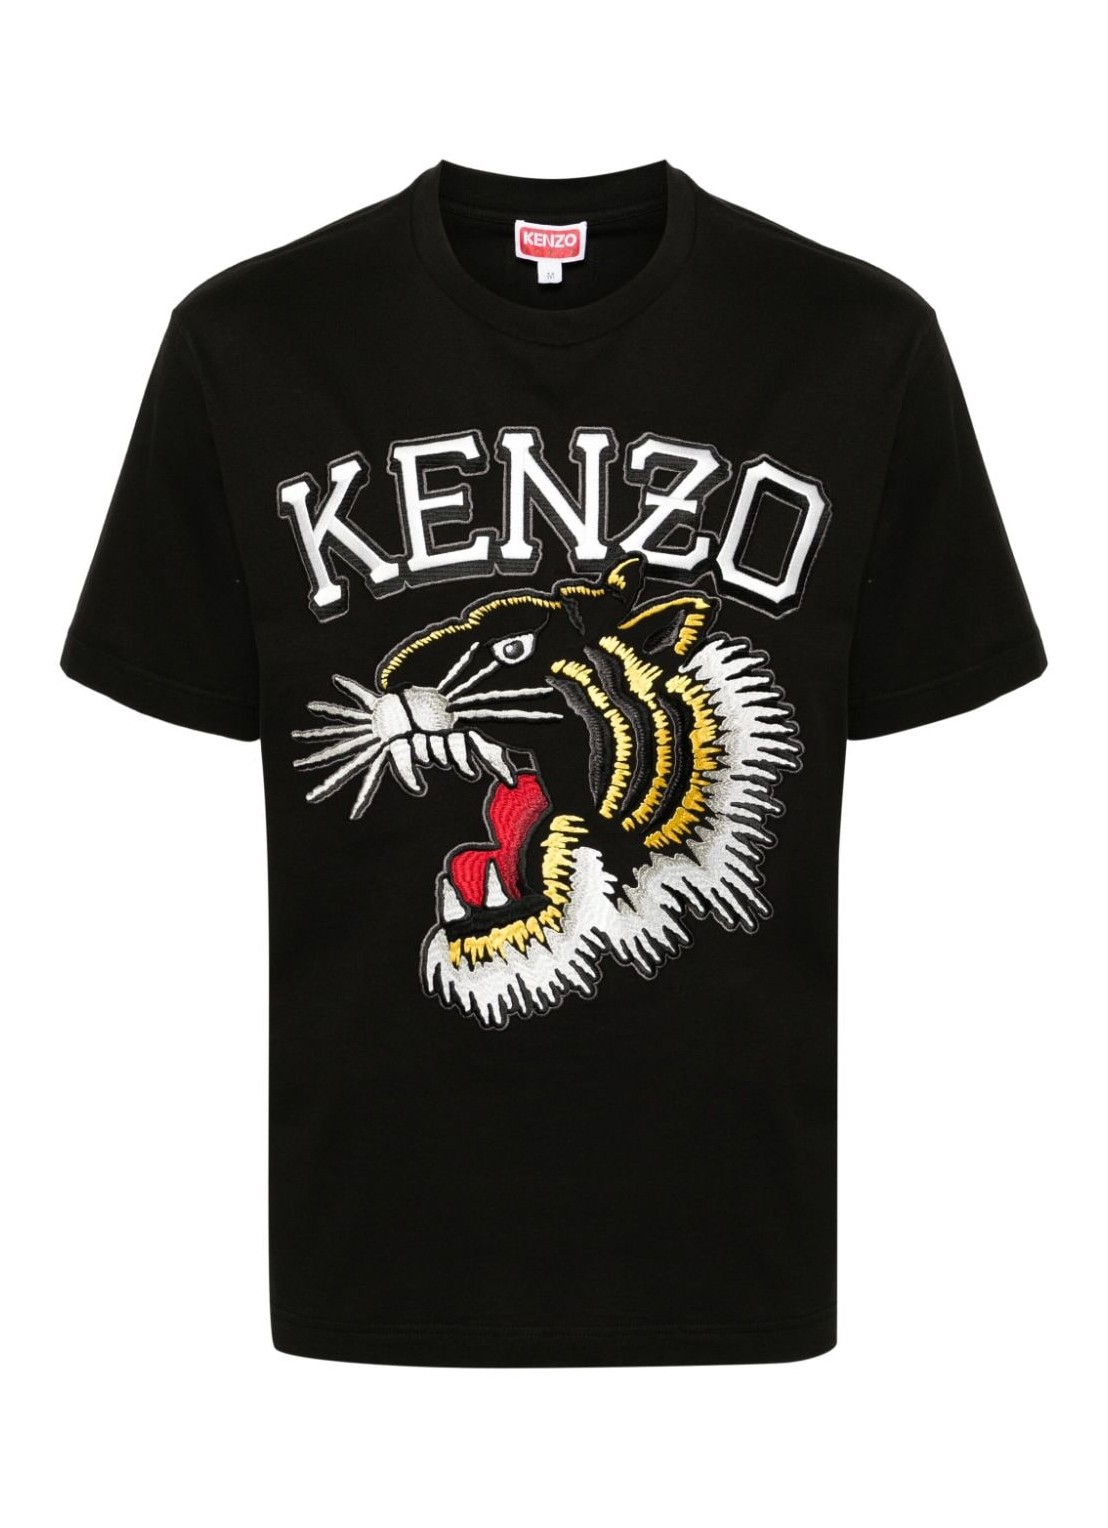 Camiseta kenzo tiger varsity classic t-shirt - fe55ts1874sg 99j talla M
 